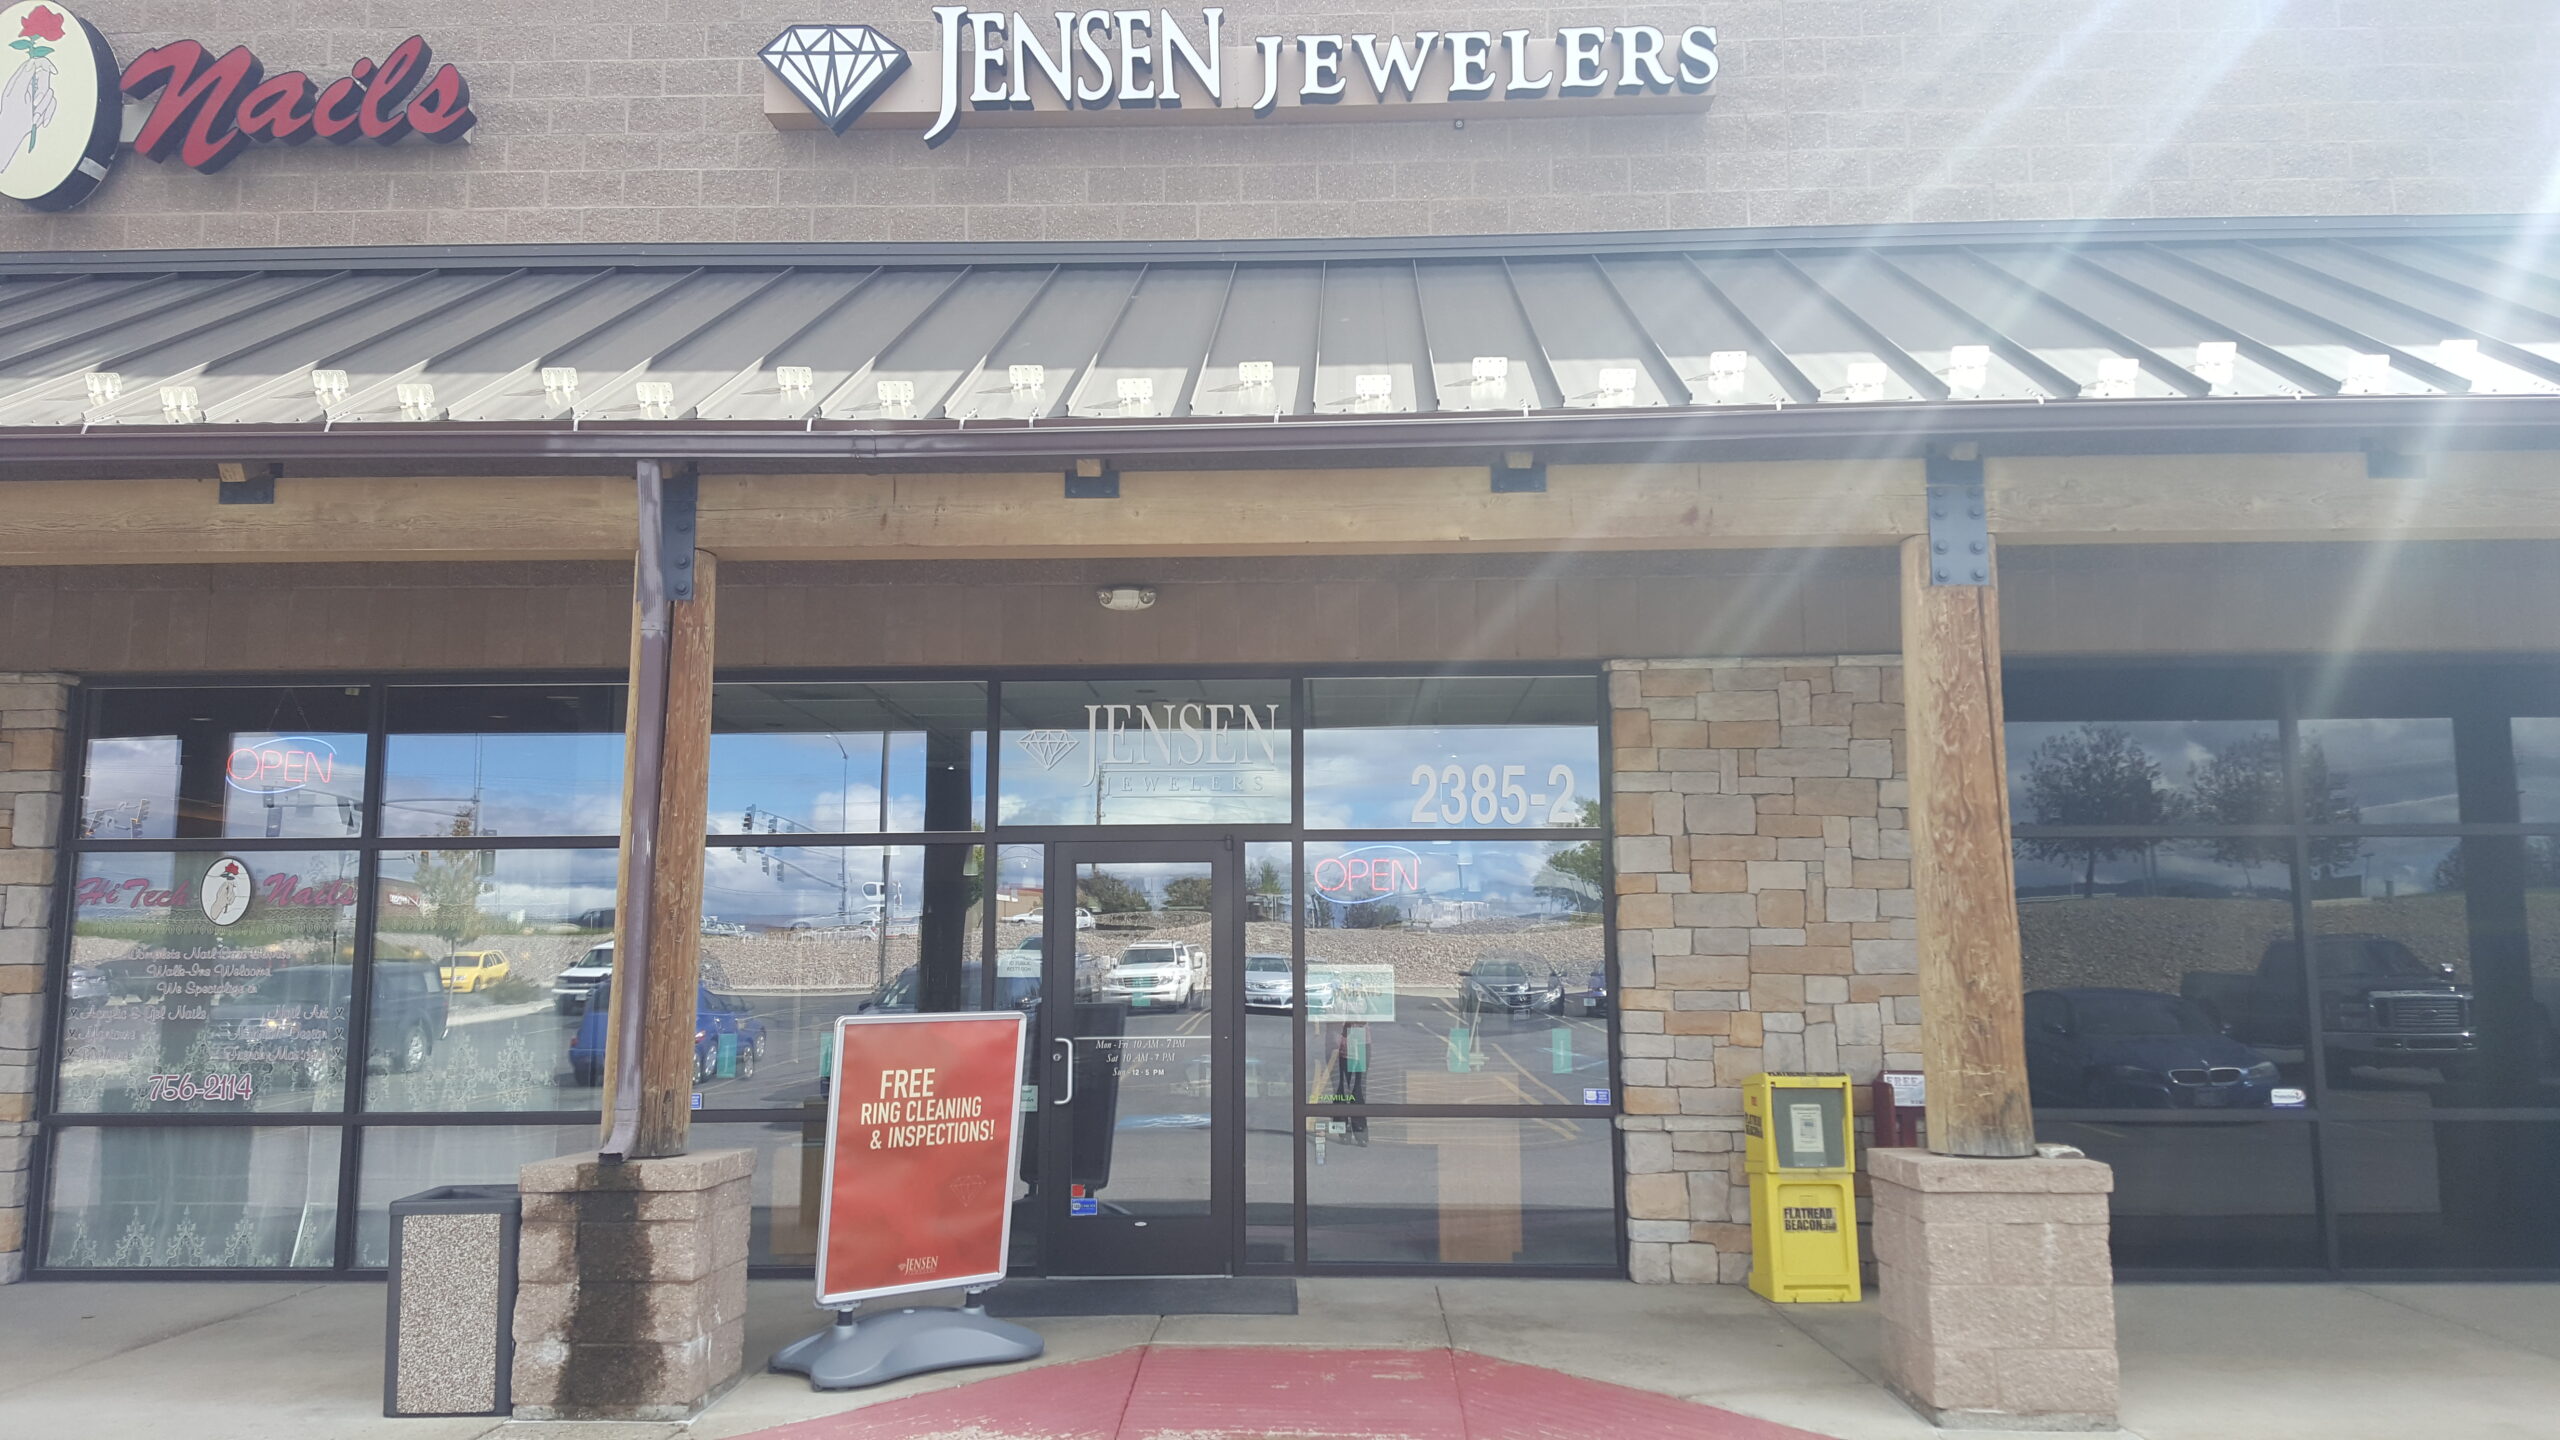 Jensen Jewelers Kalispell storefront